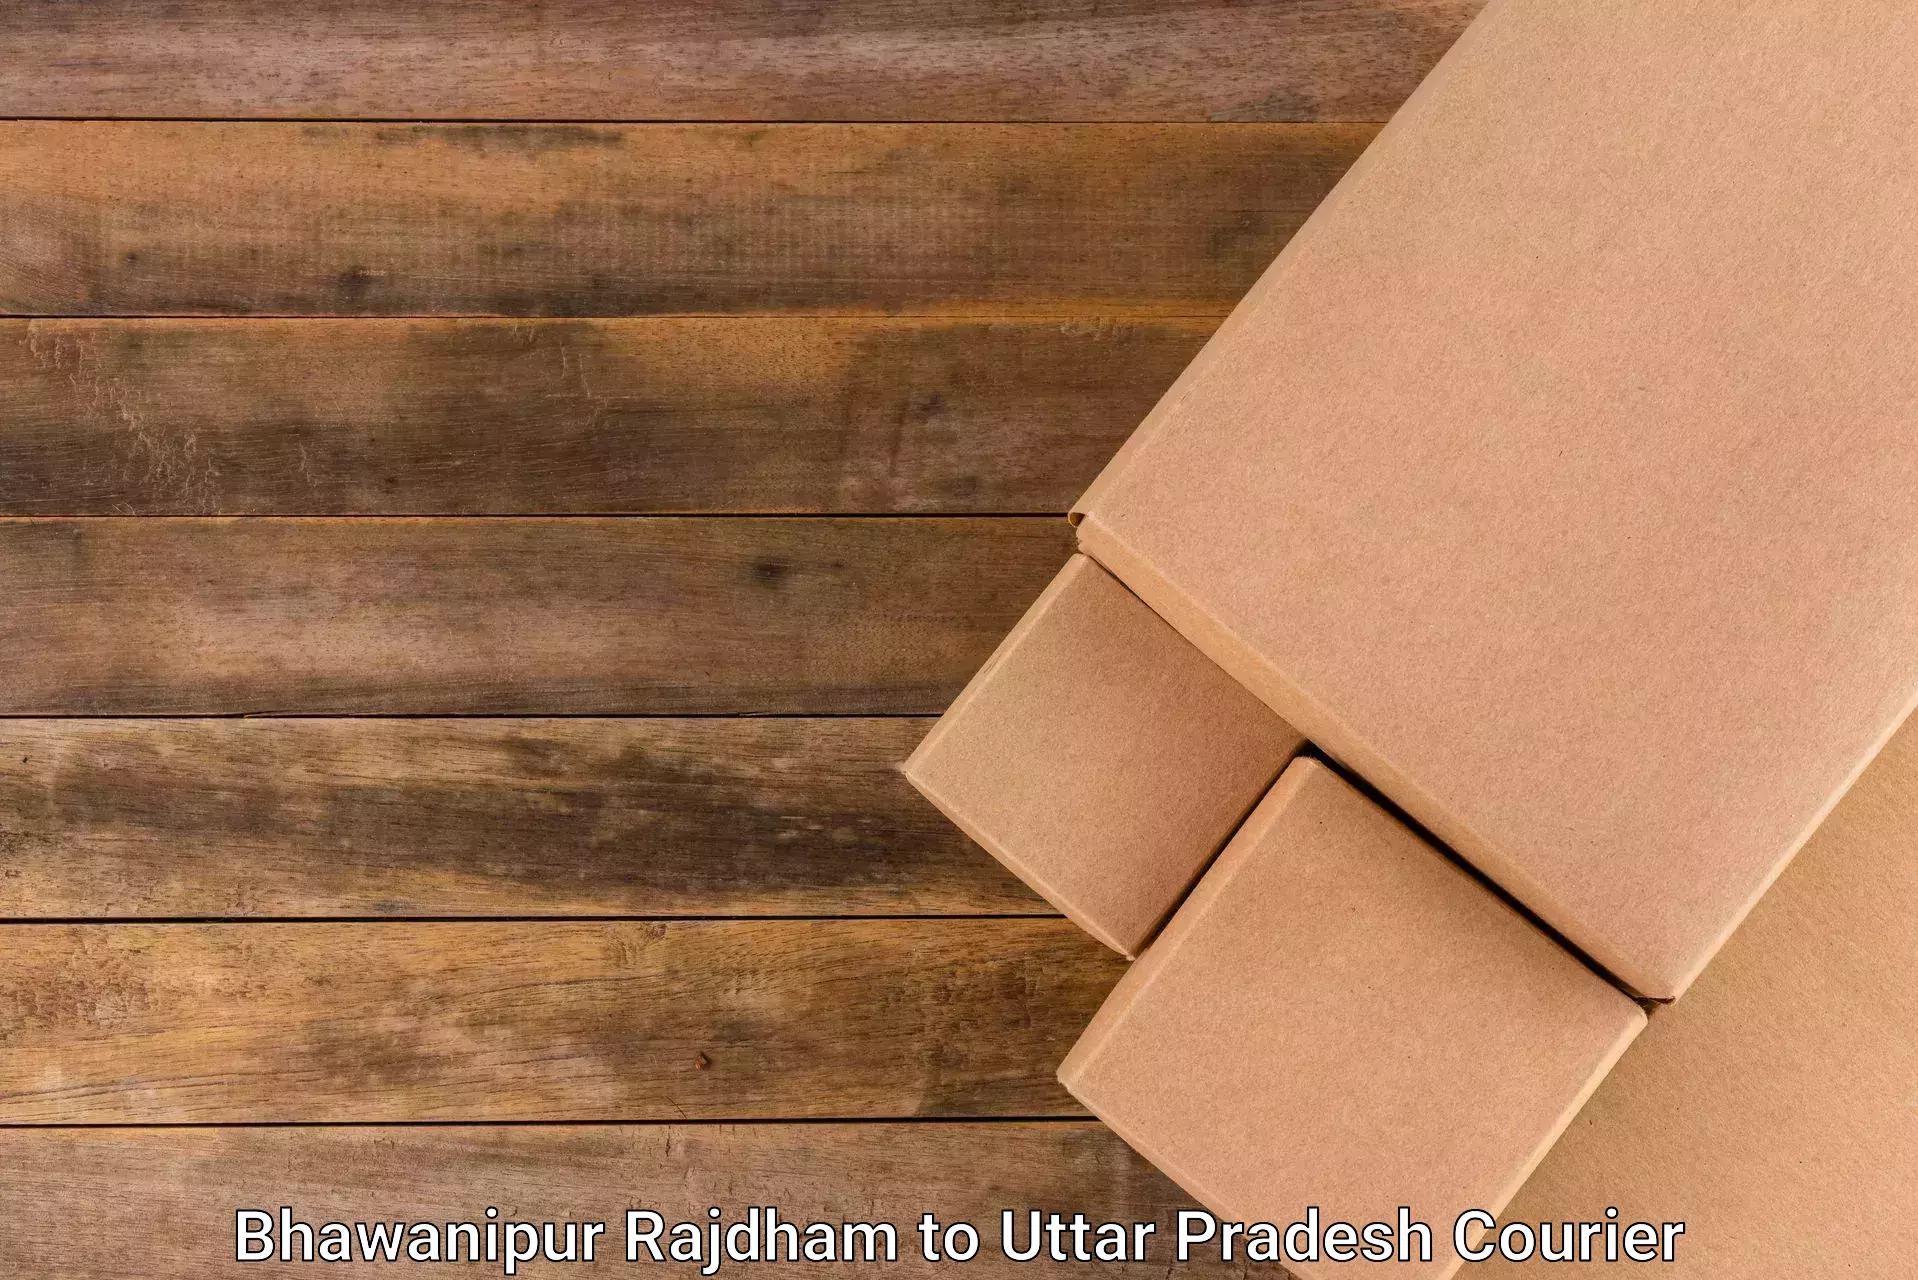 Global courier networks Bhawanipur Rajdham to Fatehpur